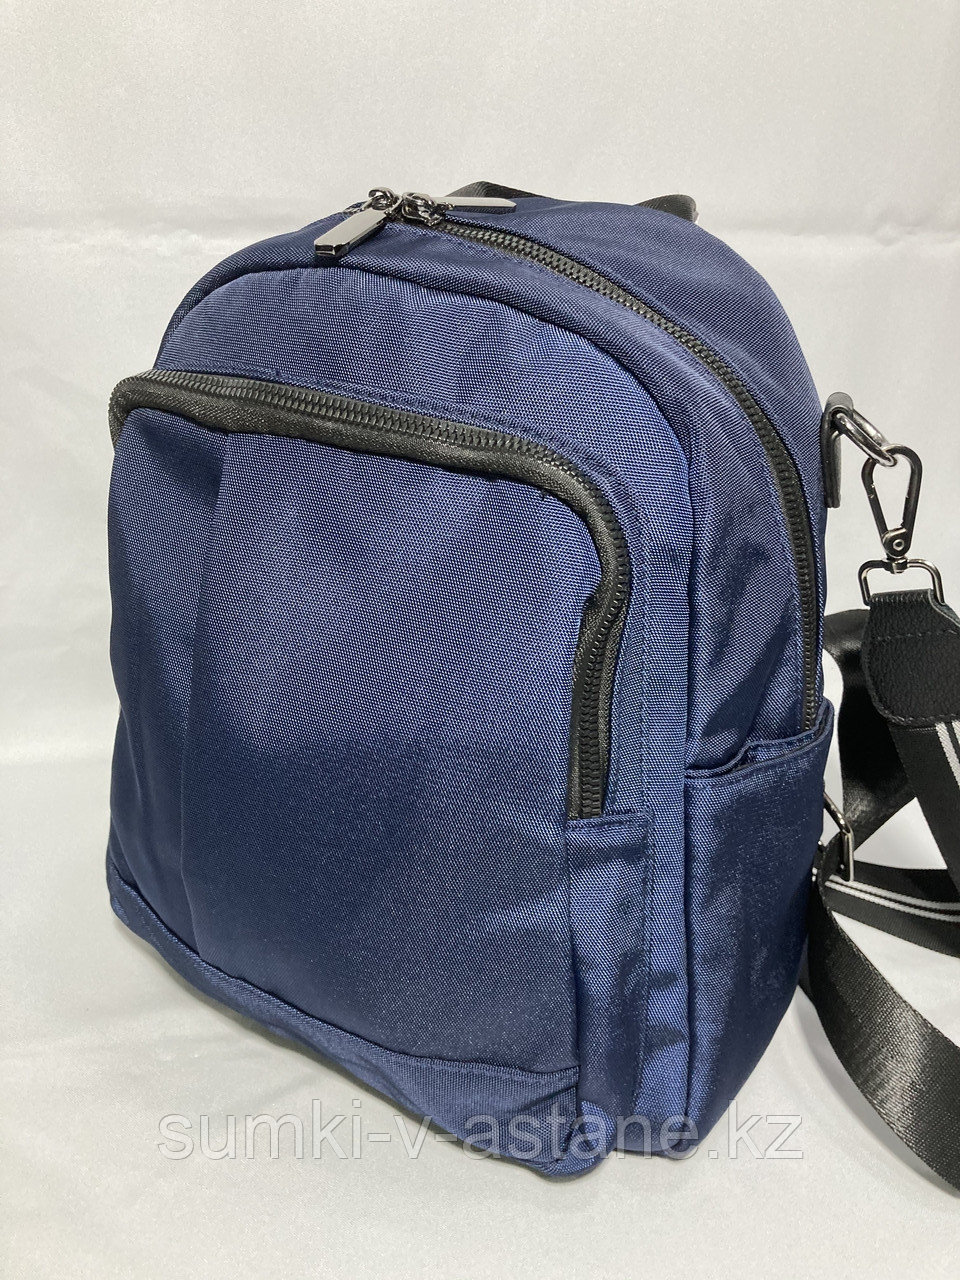 Женский мини-рюкзак/сумка (высота 30 см, ширина 25 см, глубина 11 см)